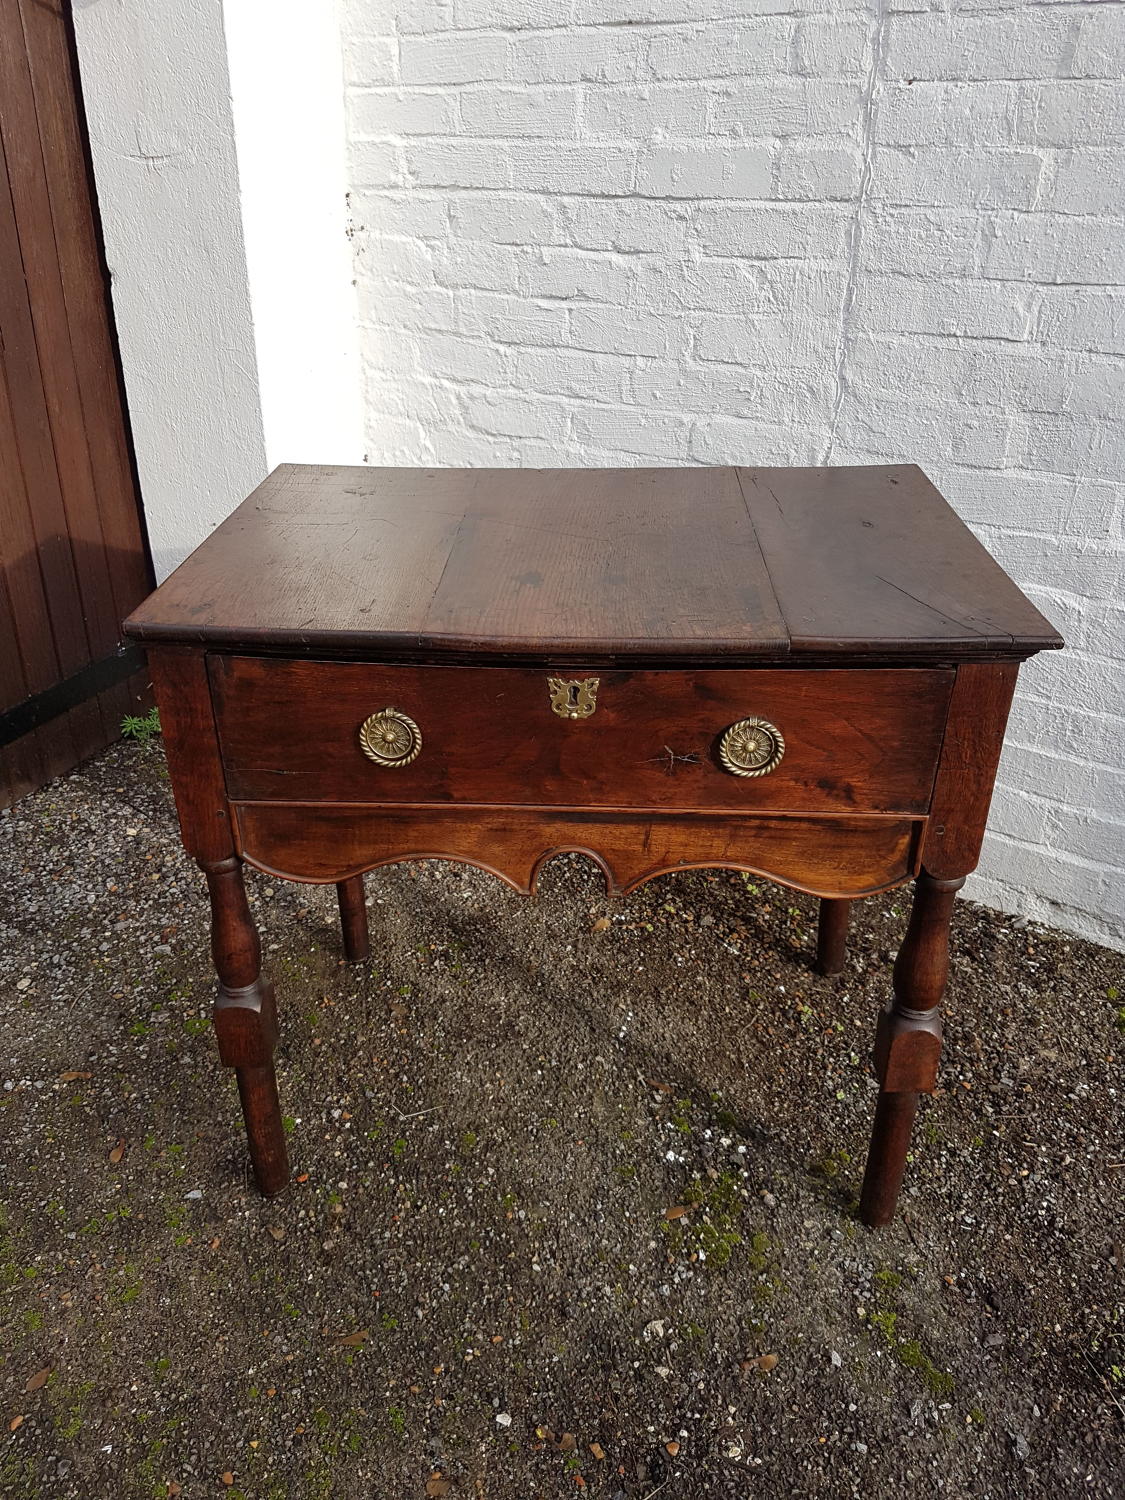 Nineteenth century oak side table or lowboy